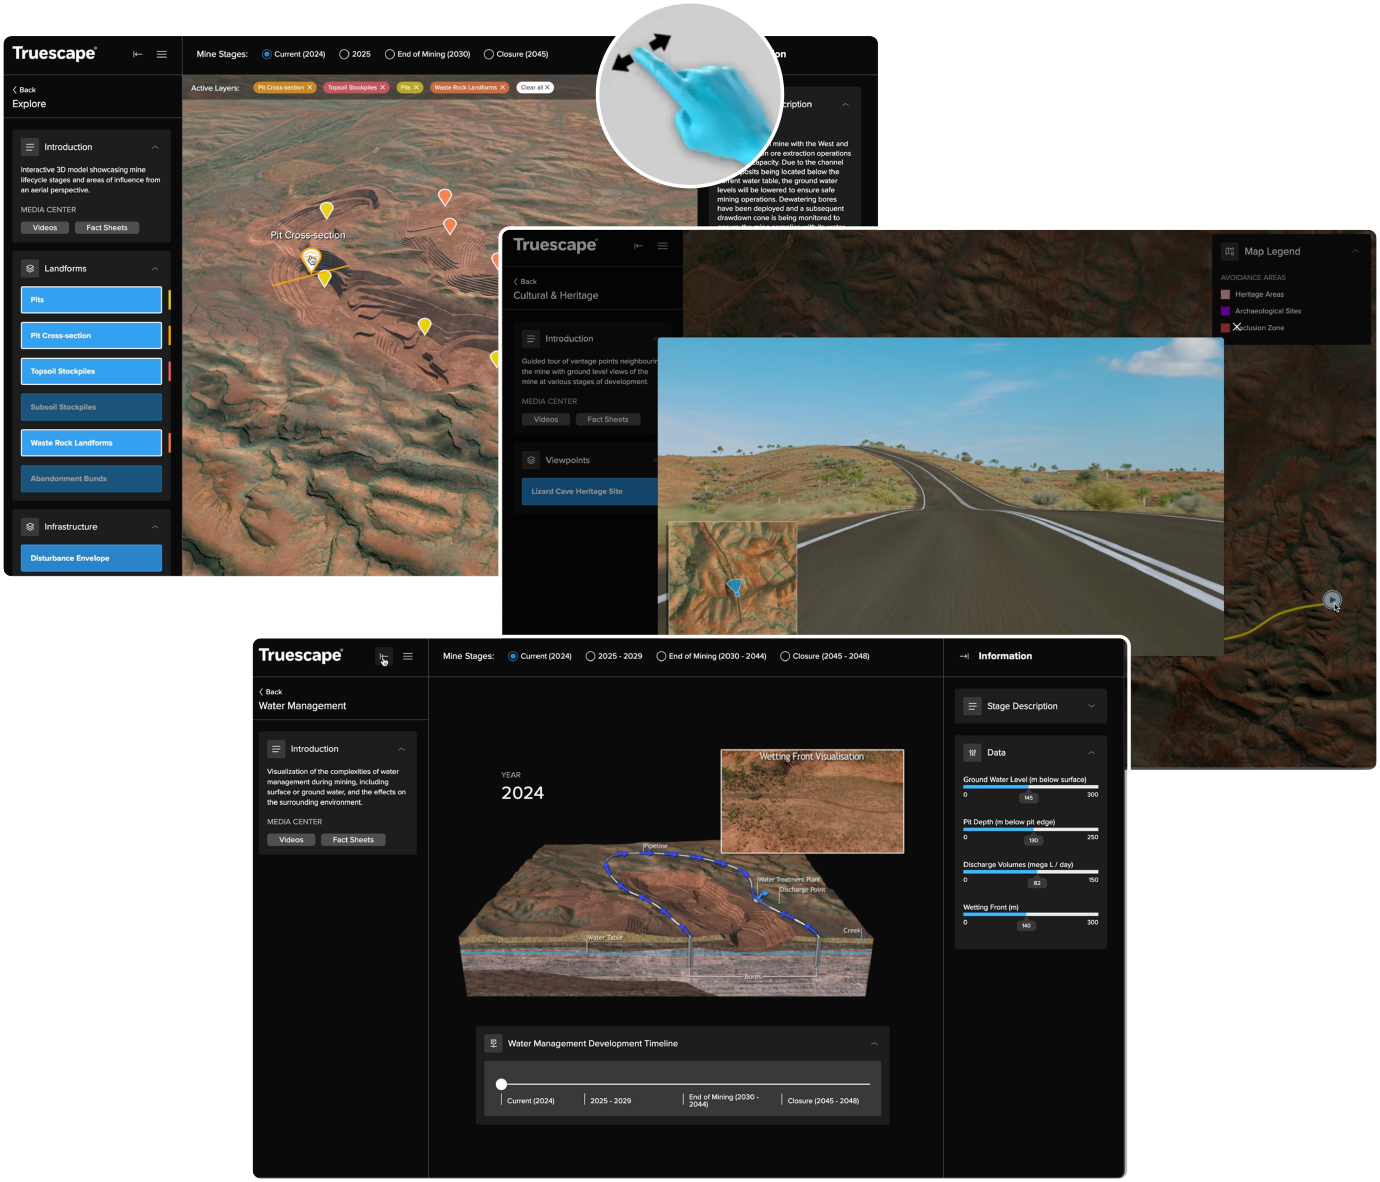 Truescape Interactive Mining Tool